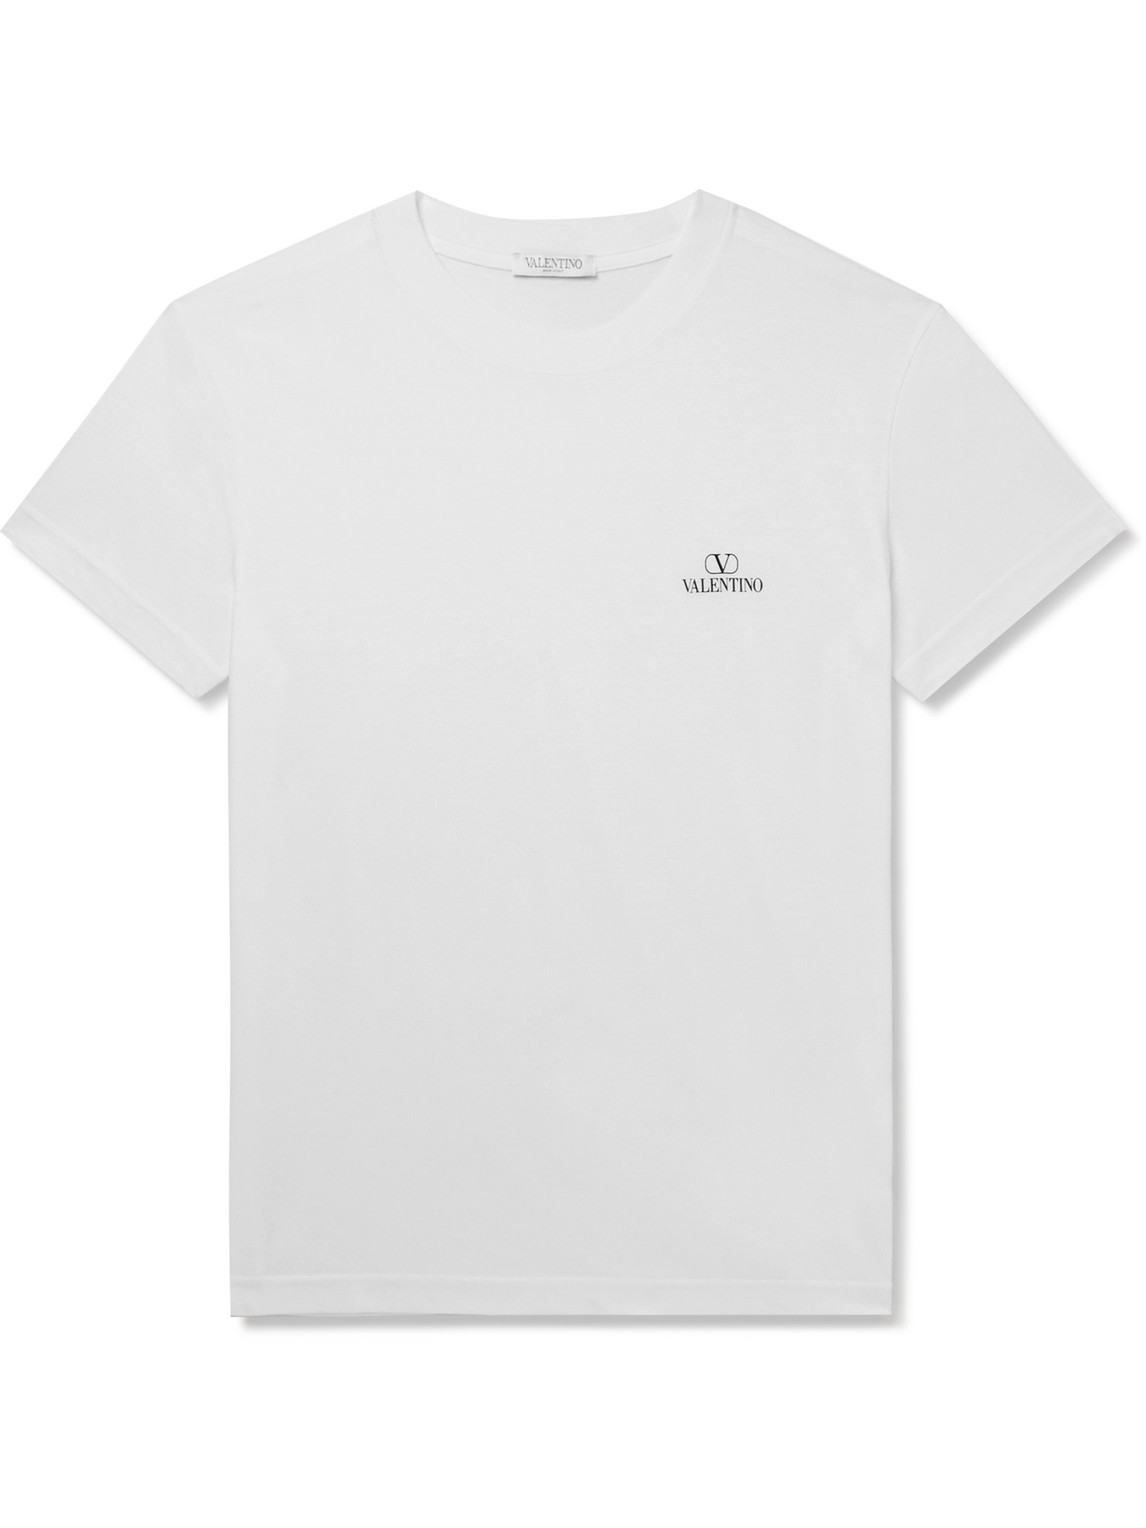 Valentino Slim-Fit Logo-Print Cotton-Jersey T-Shirt